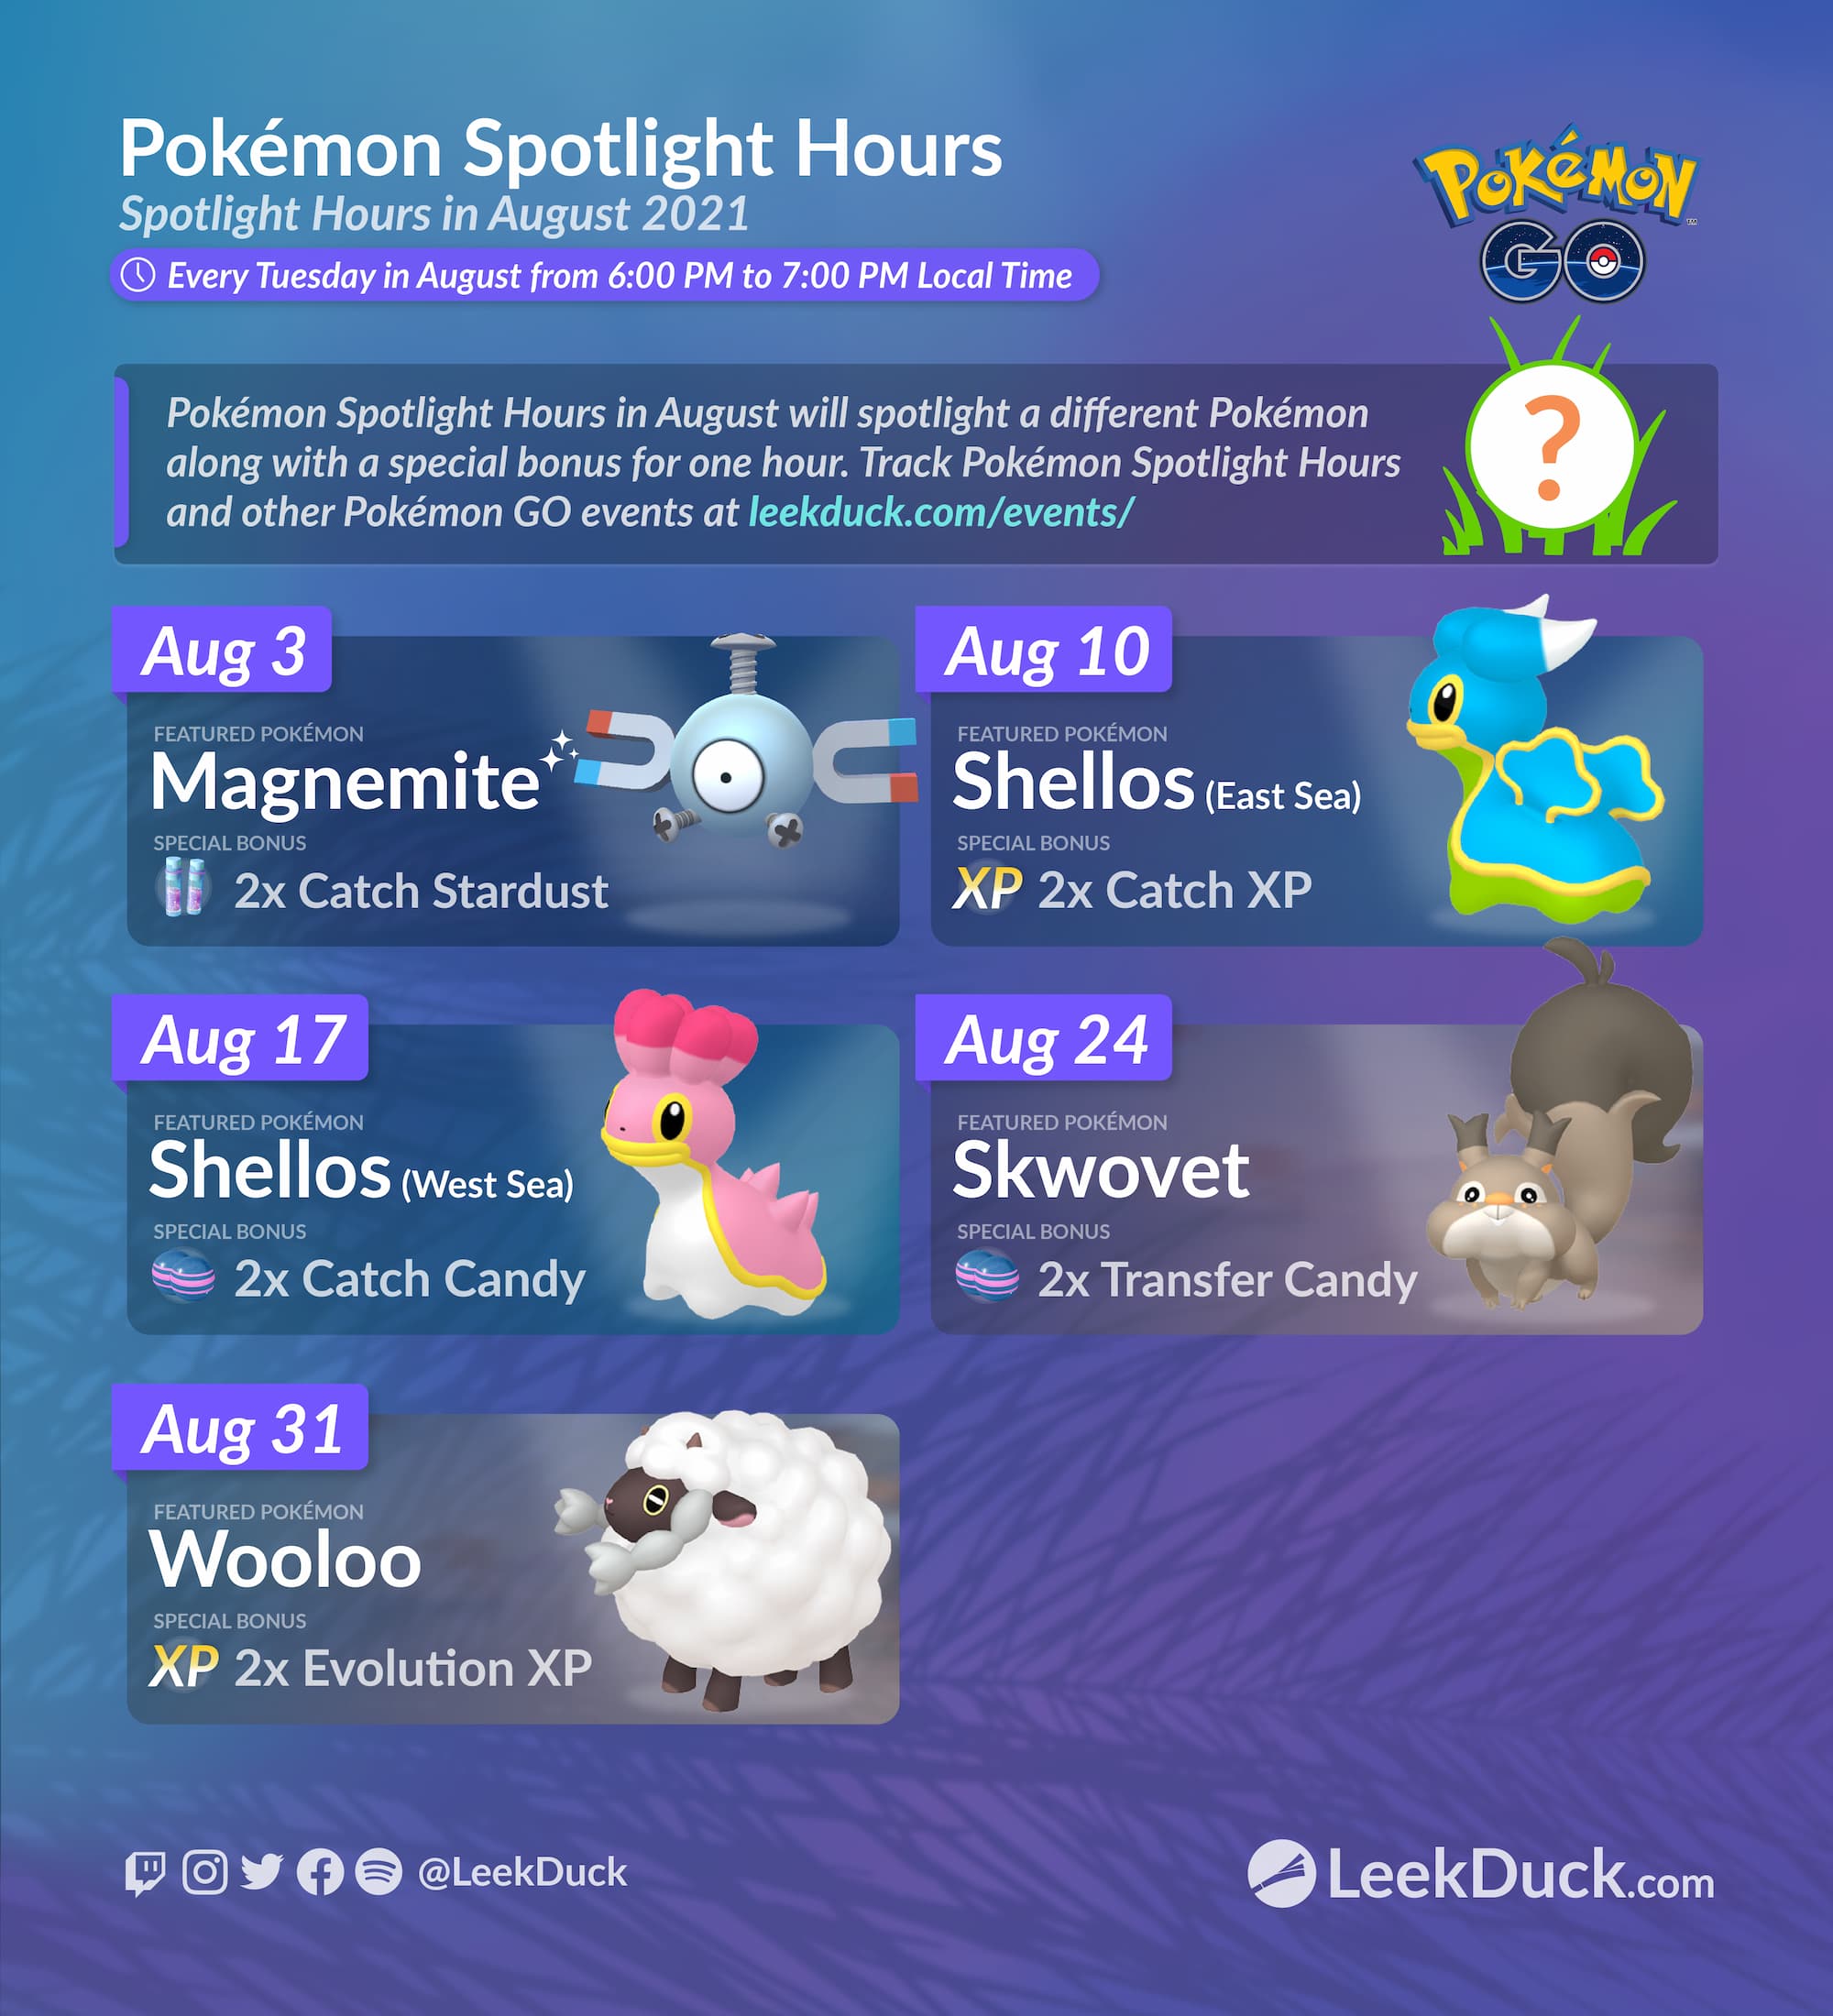 Wooloo Spotlight Hour Leek Duck Pokémon GO News and Resources